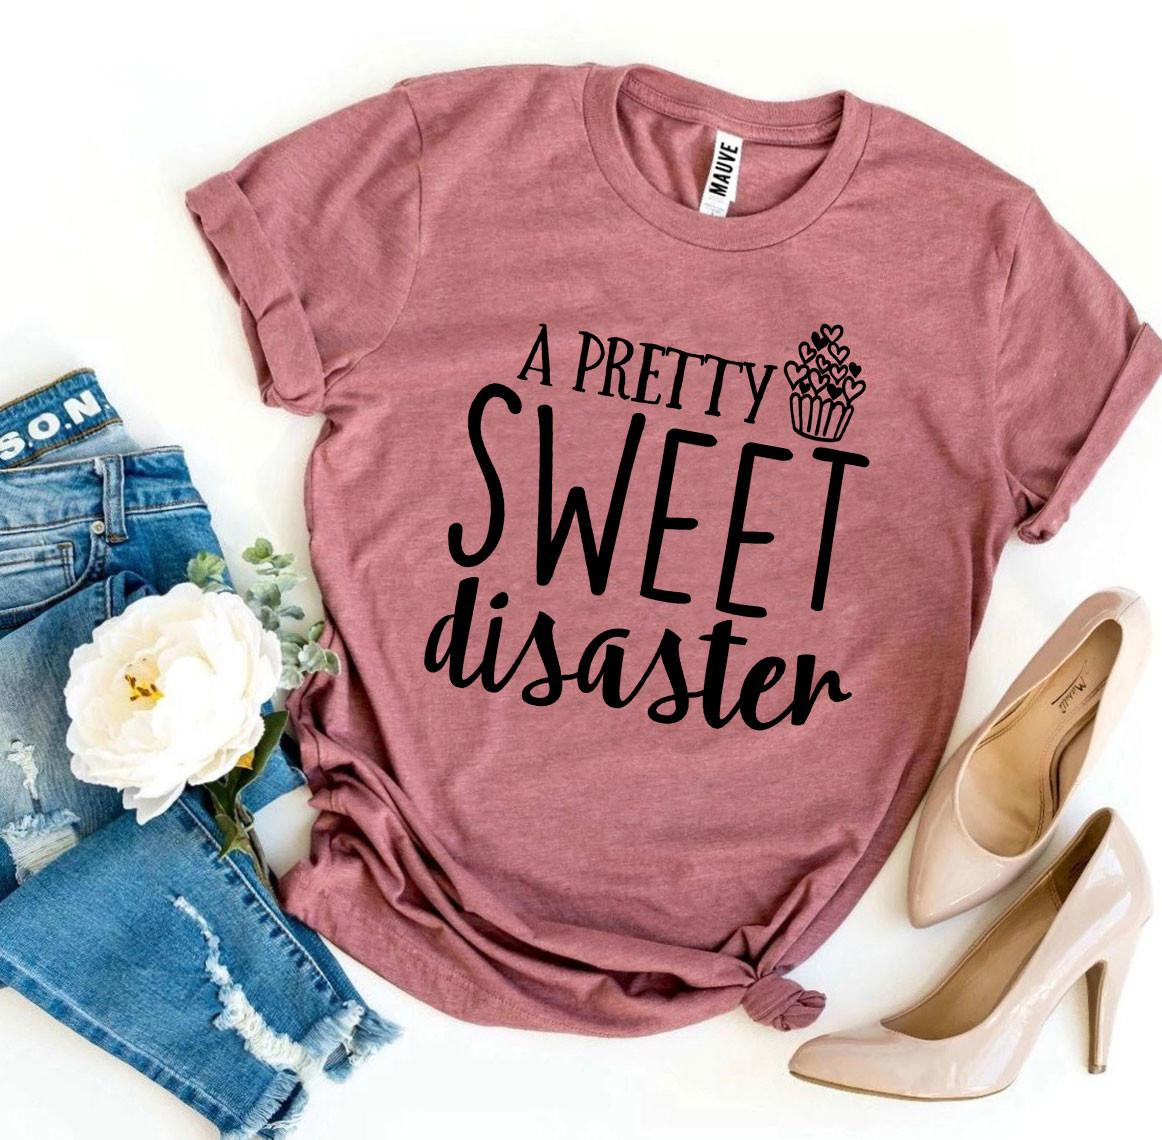 A Pretty Sweet disaster T-shirt